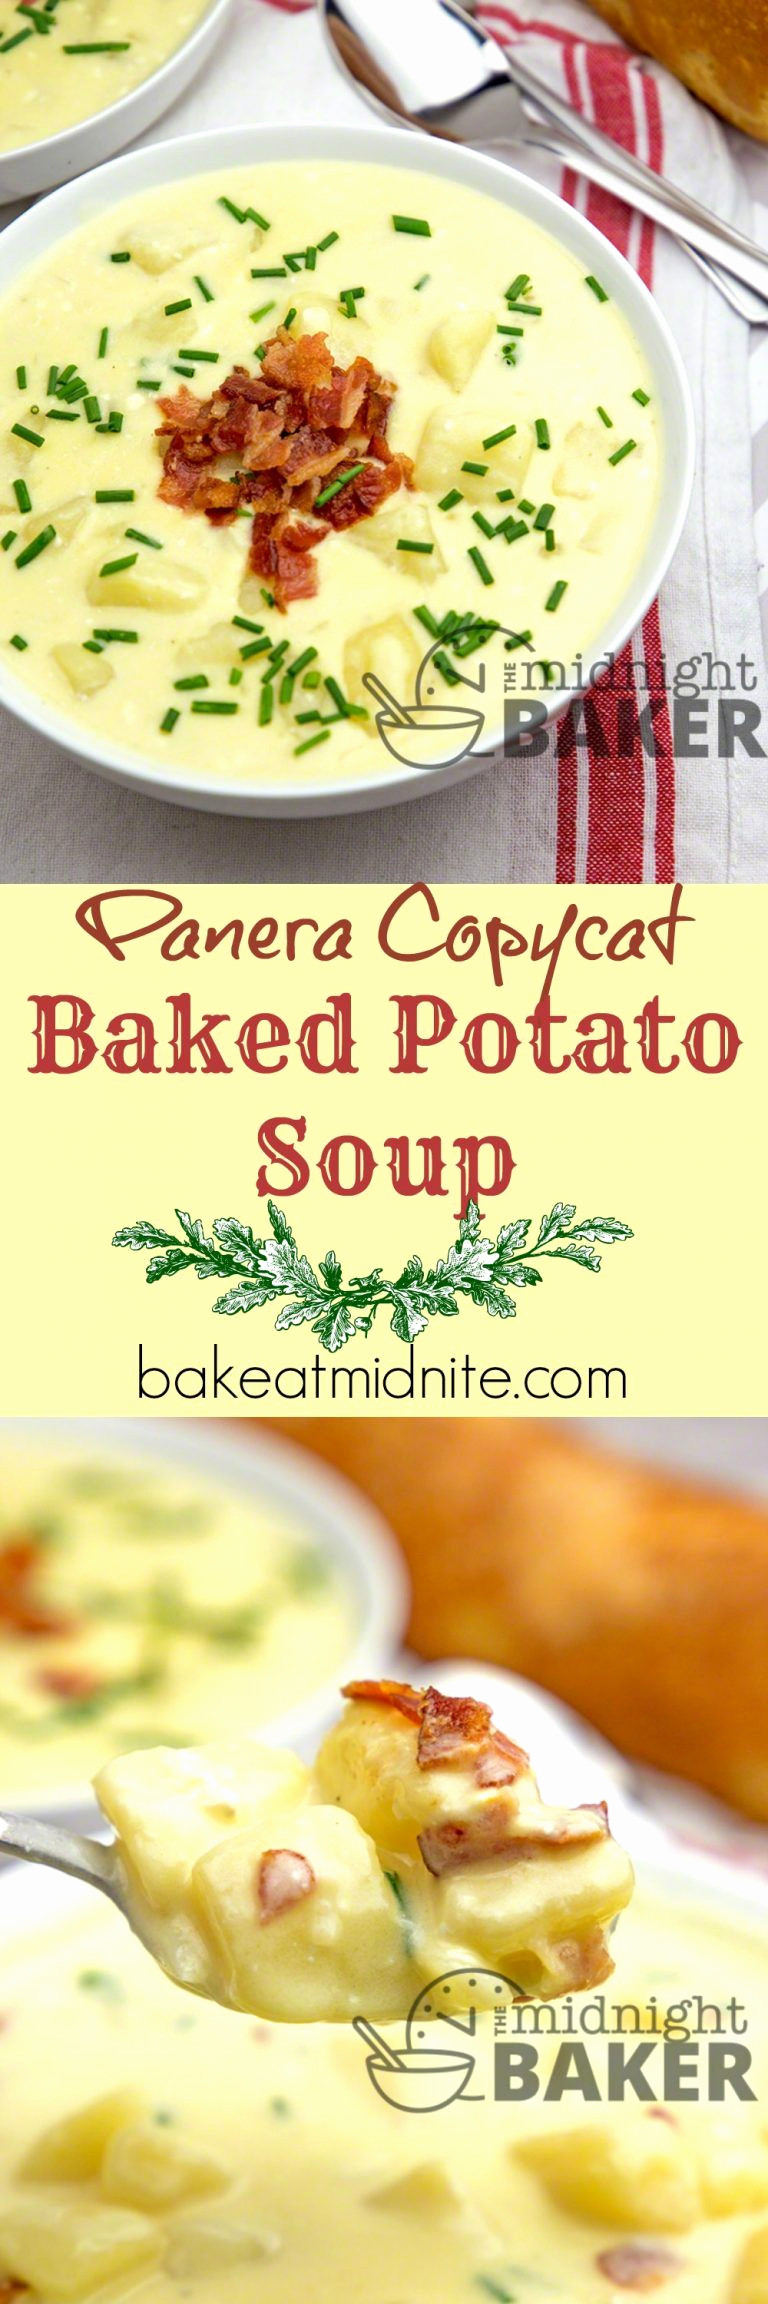 Panera Baked Potato Soup Recipe
 Panera Bread Baked Potato soup Recipe